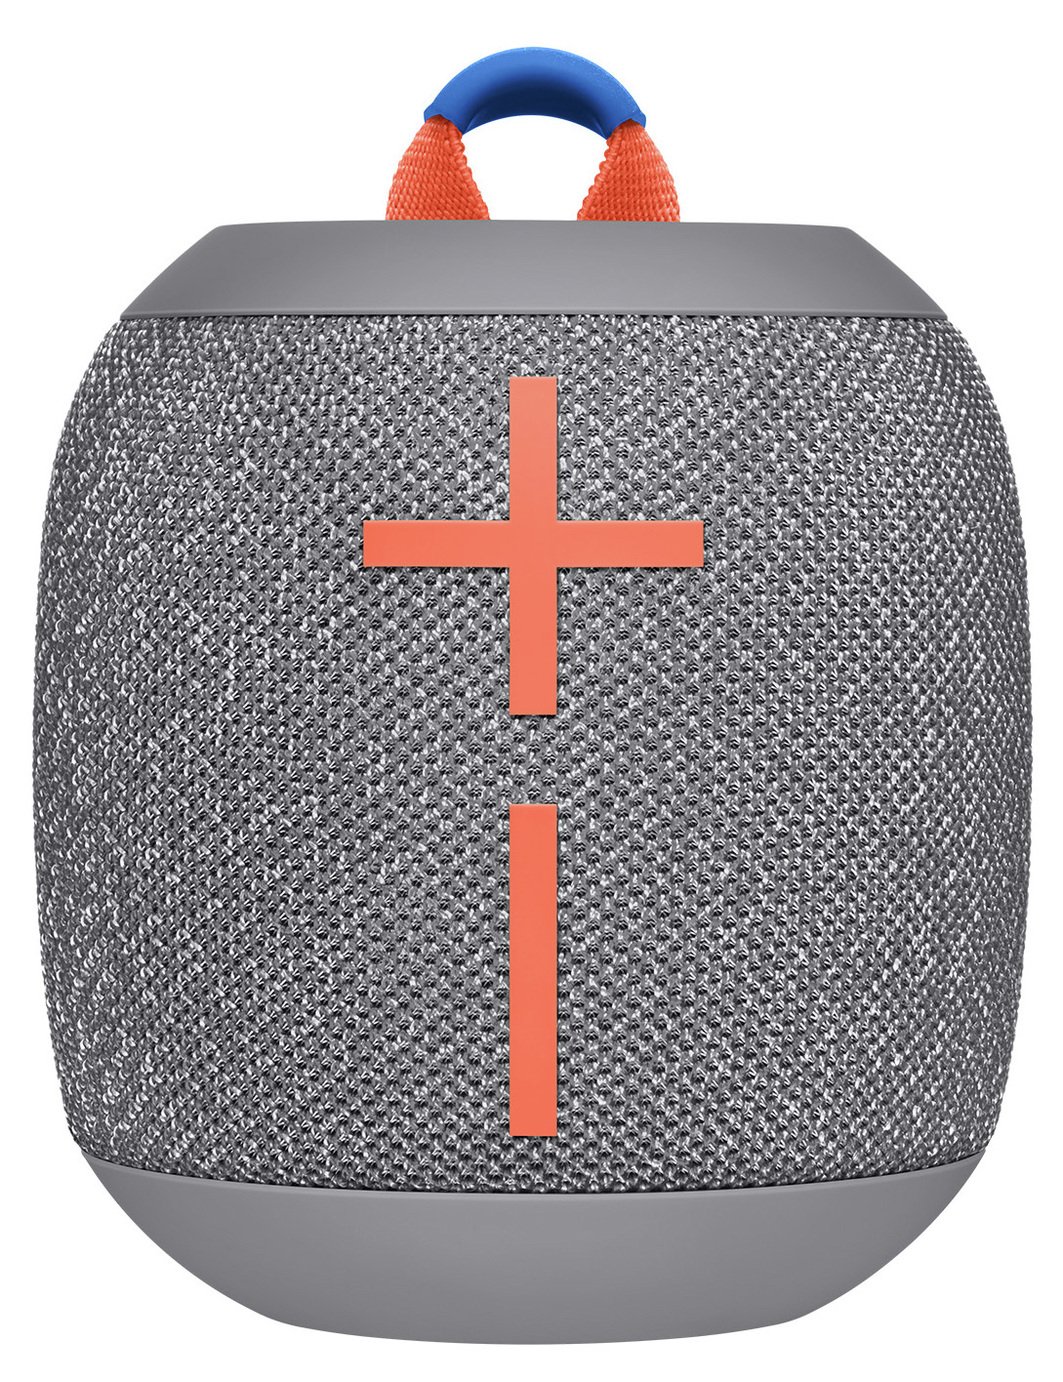 Ultimate Ears WONDERBOOM 2 Bluetooth Wireless Speaker - Grey